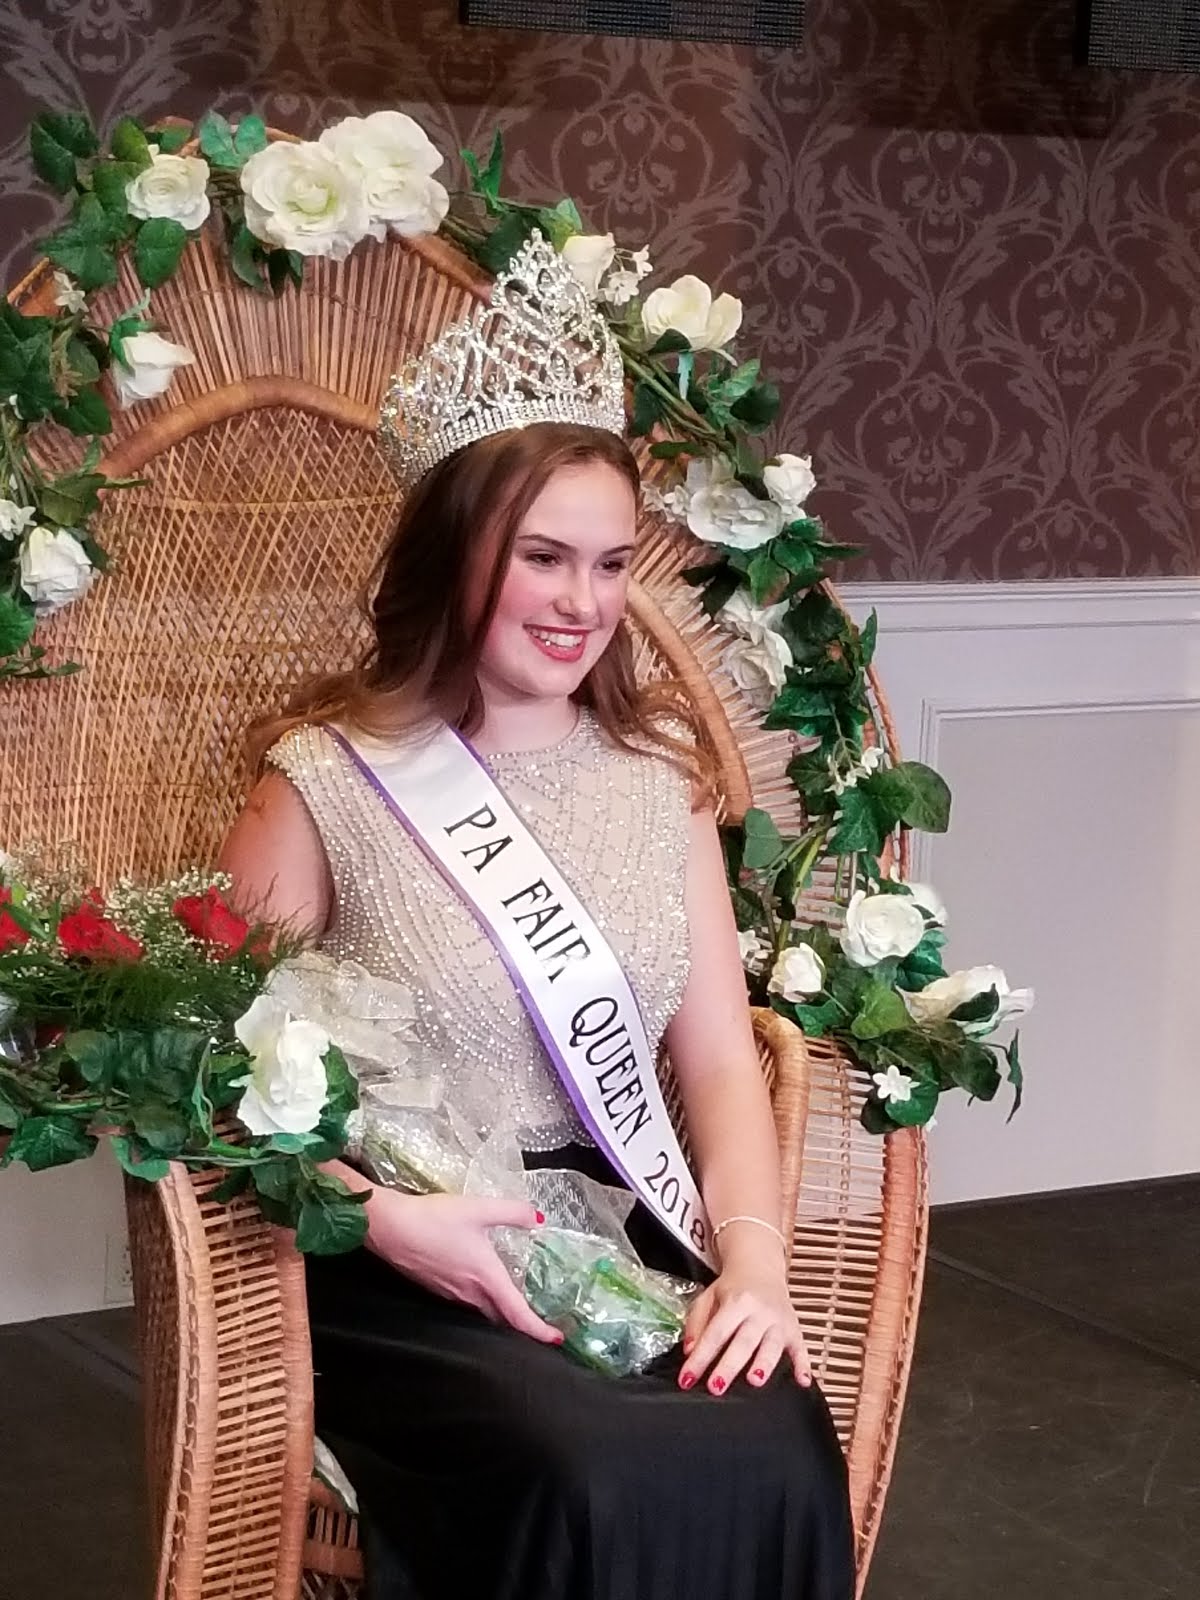 Pa State Fair Queen- 2018 Elizabeth Voight